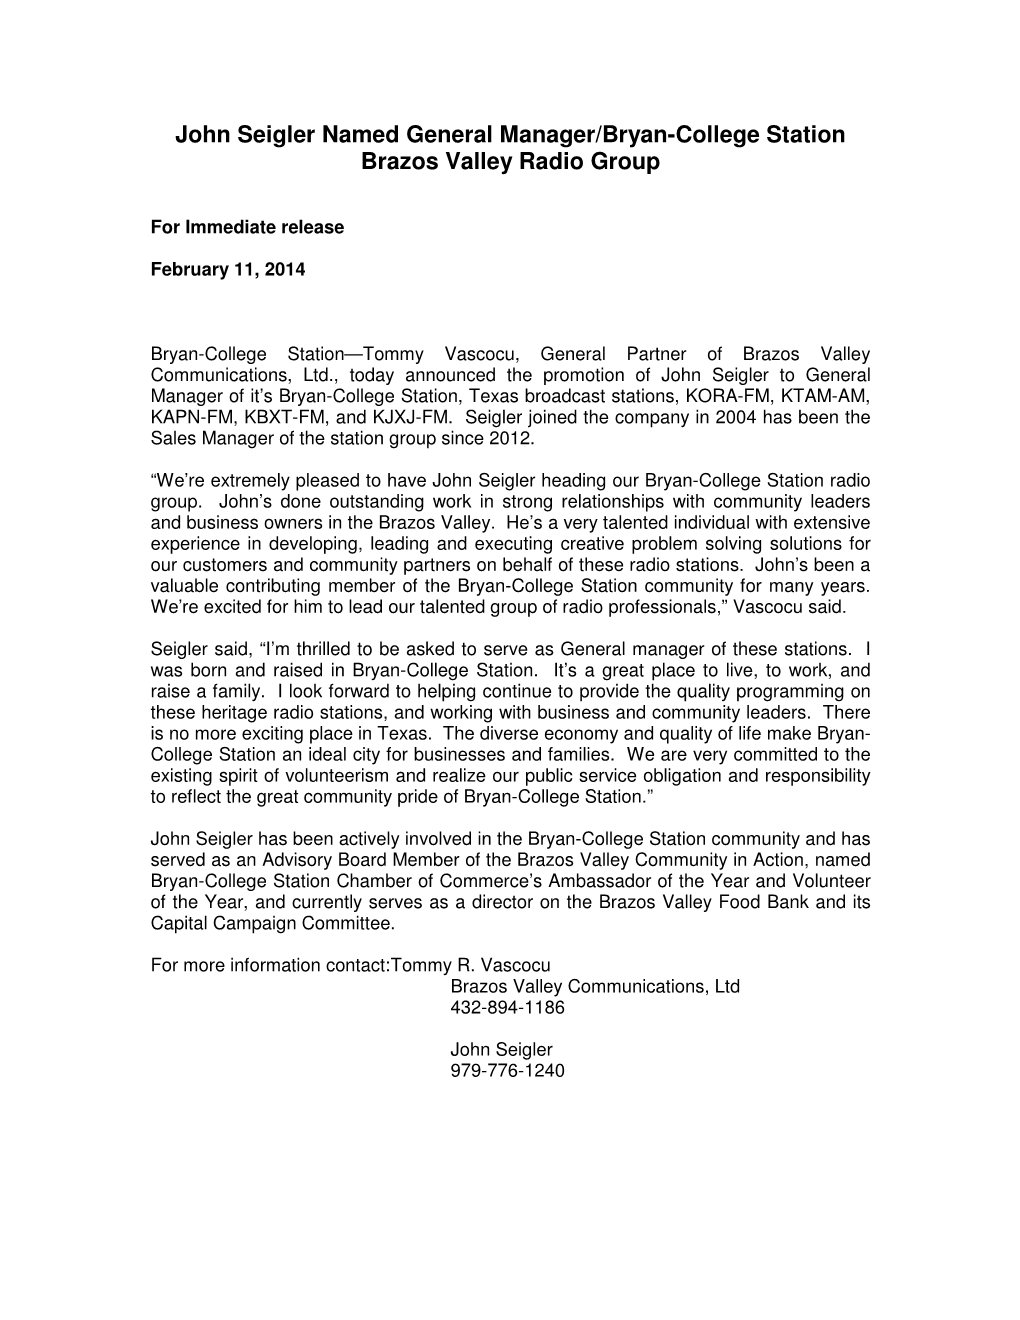 John Seigler Named General Manager/Bryan-College Station Brazos Valley Radio Group